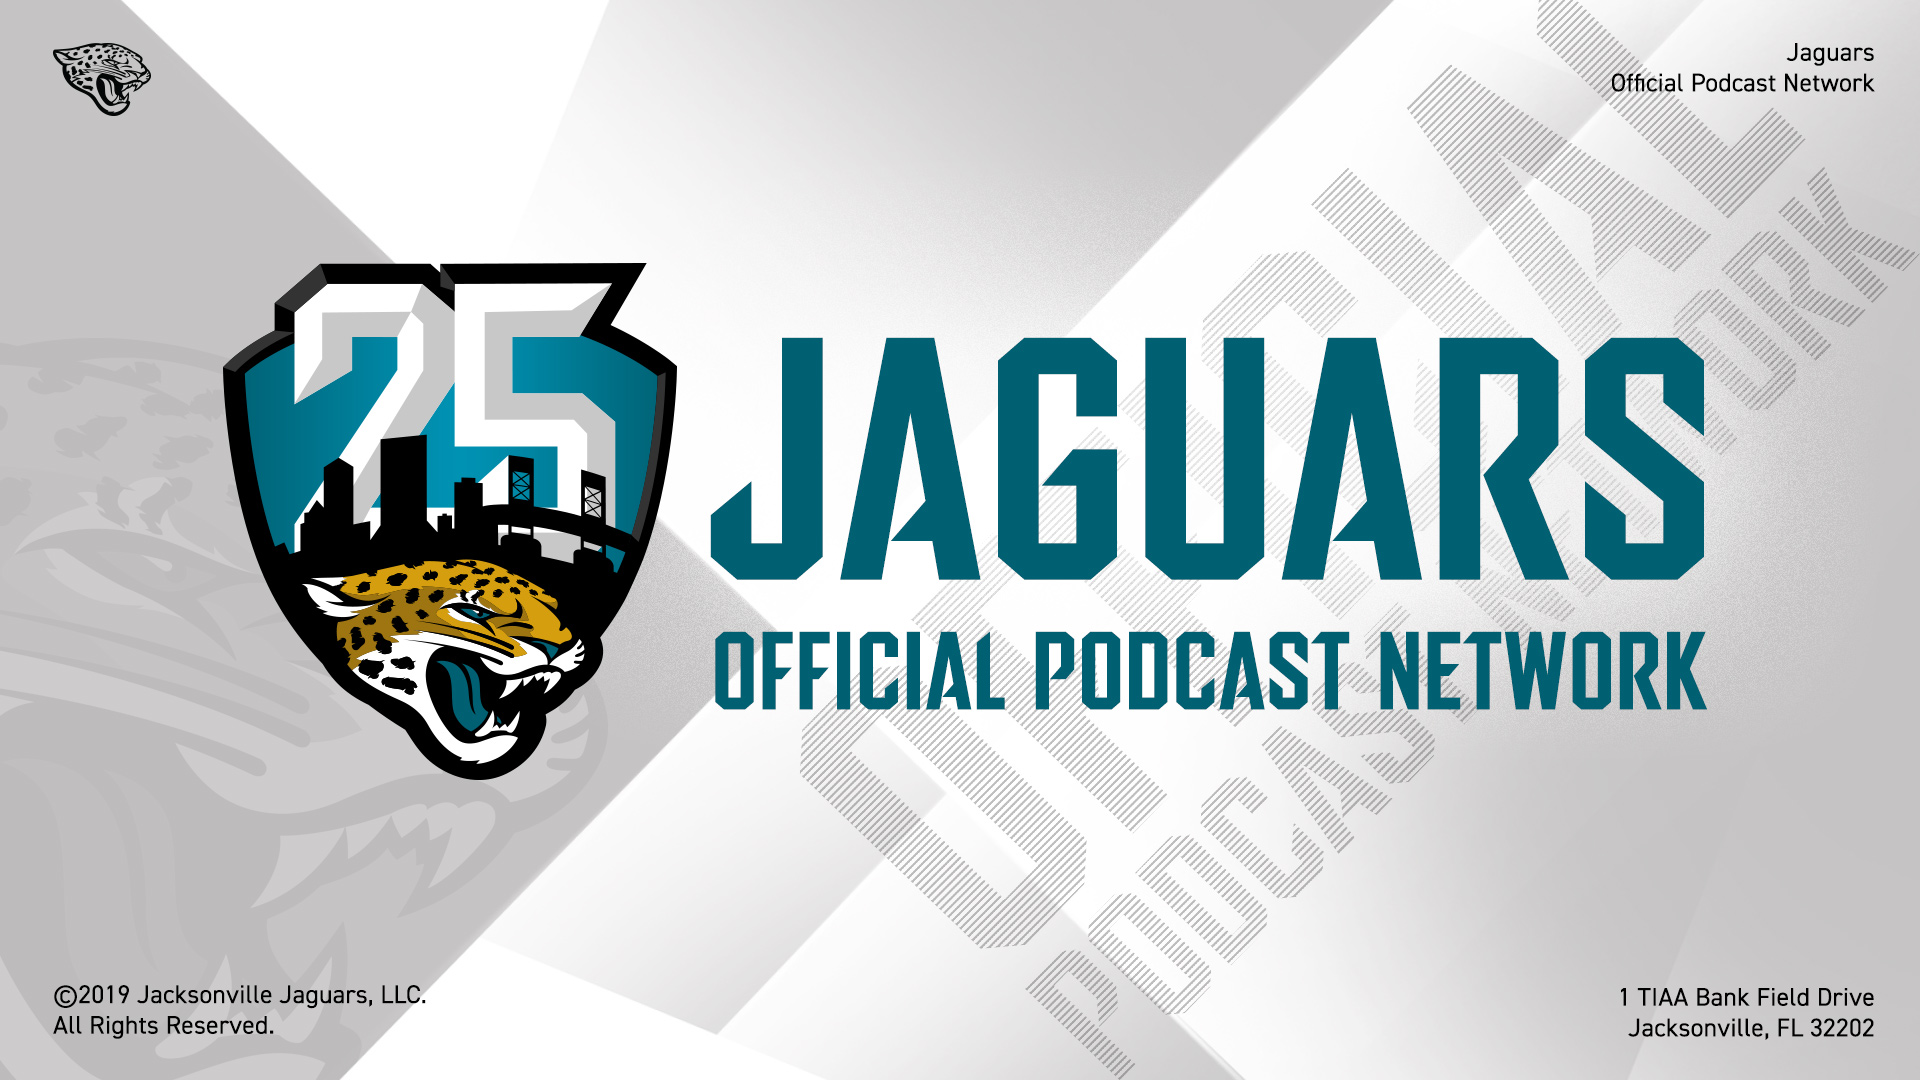 Jaguars Official Podcast Network